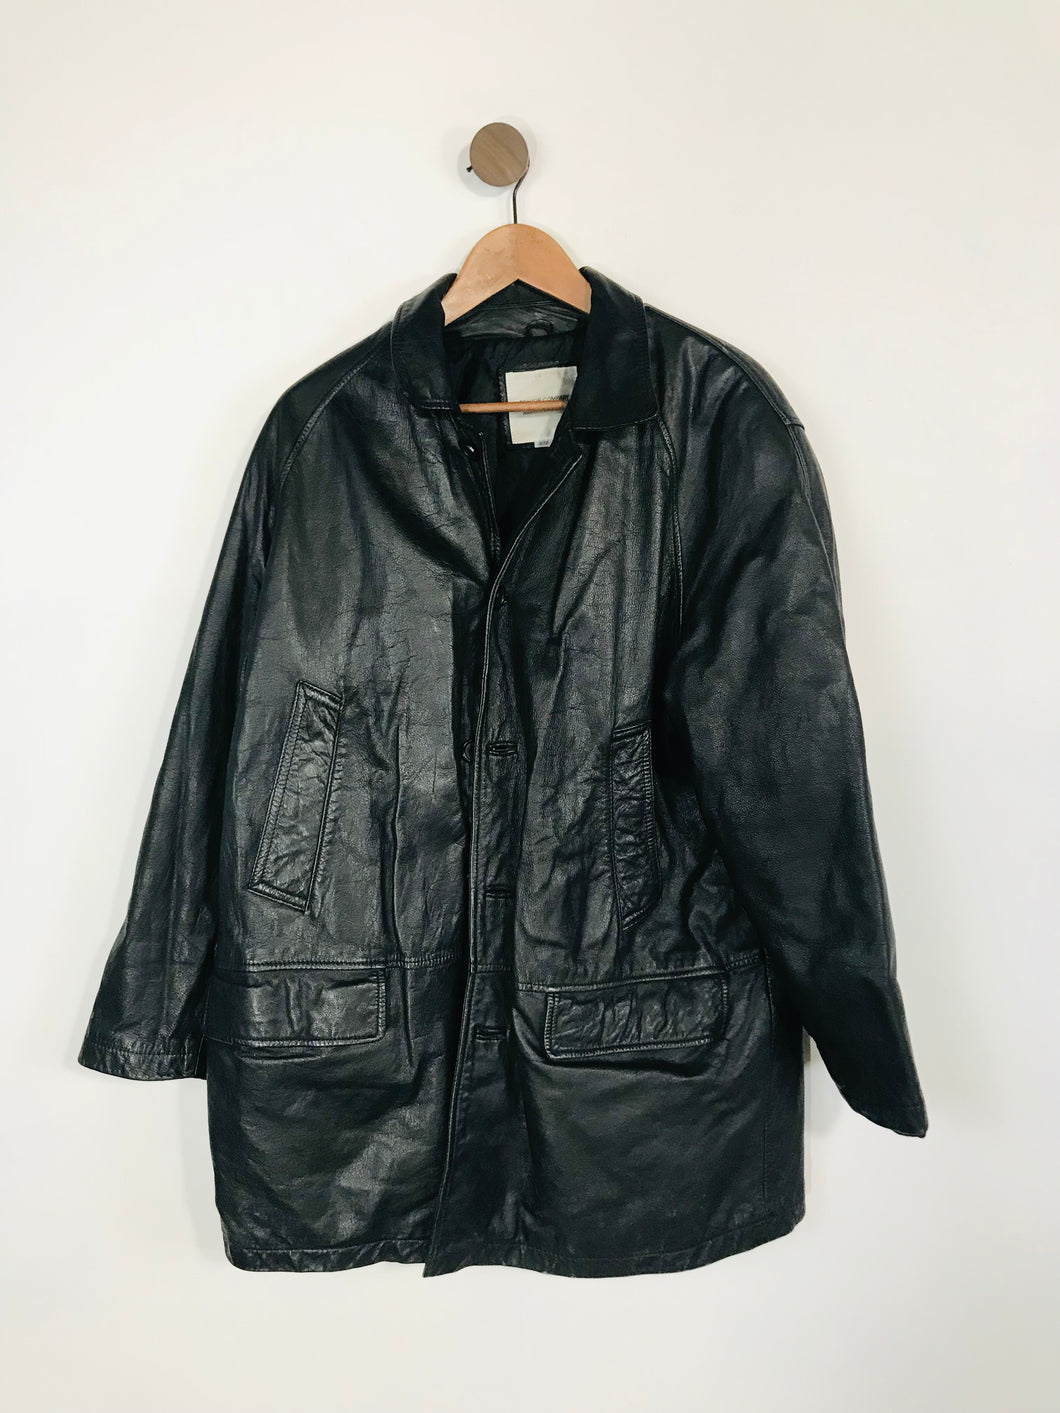 Seahop Company Men's Leather Vintage Military Jacket | L | Black